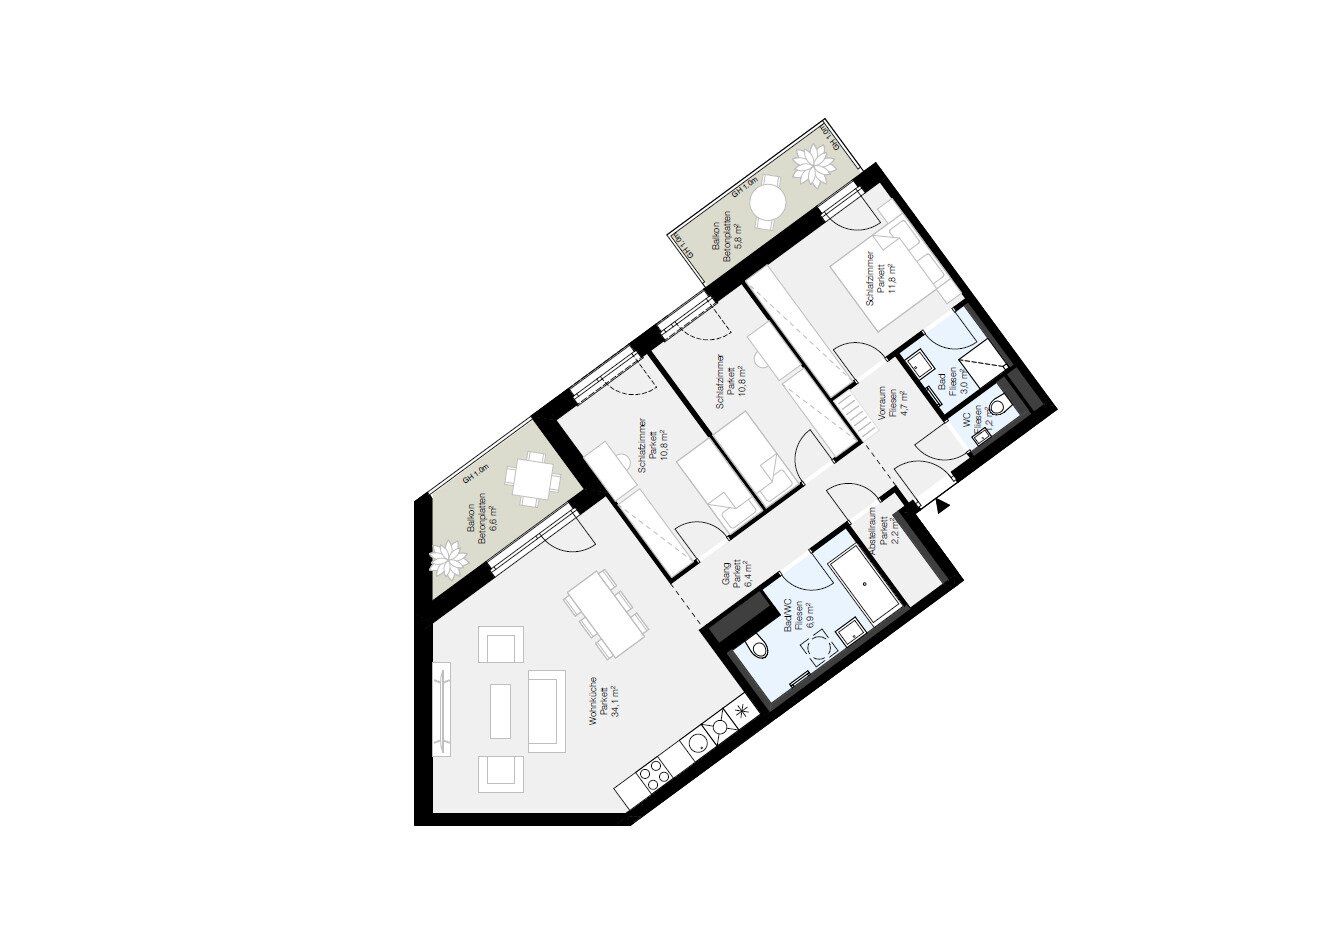 Erstbezug! Großartige 4-Zimmer-Dachgeschosswohnung mit 2 Balkonen zu vermieten!